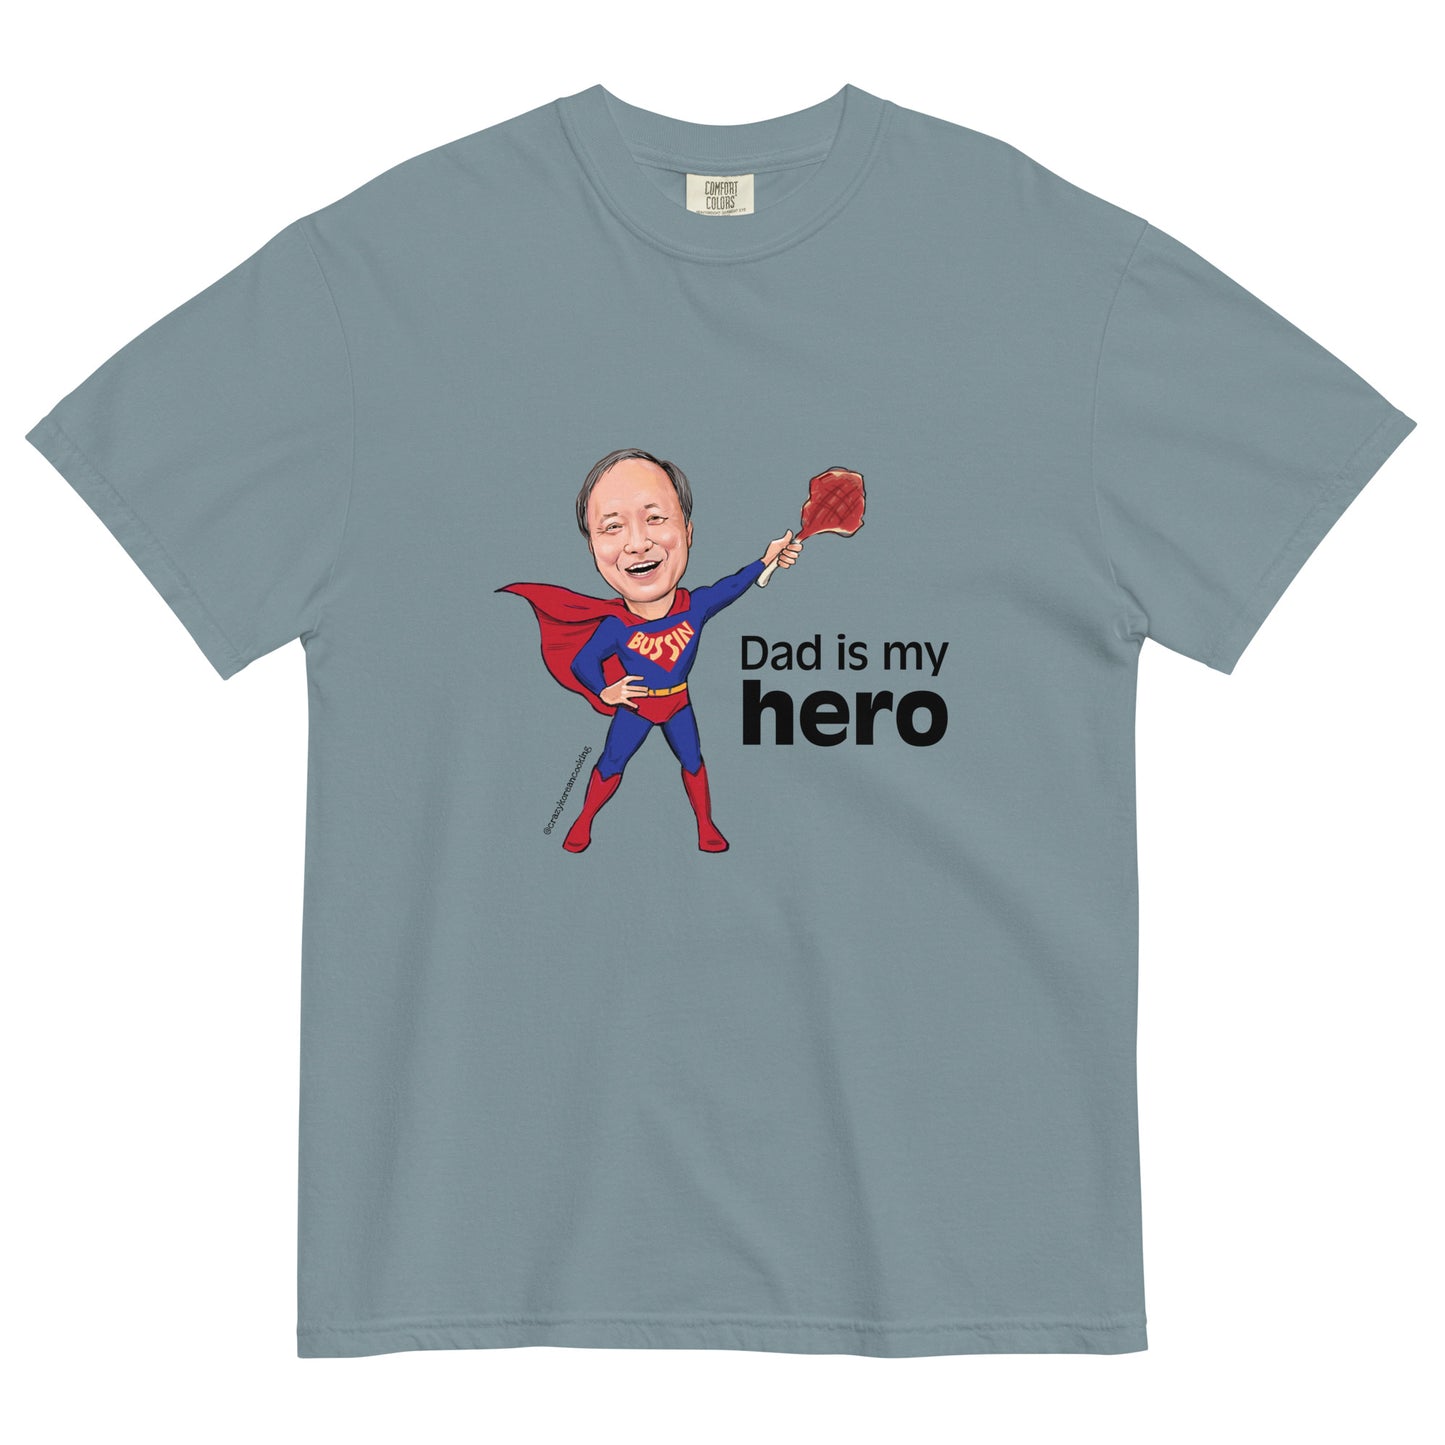 Unisex t-shirt, Dad is my hero